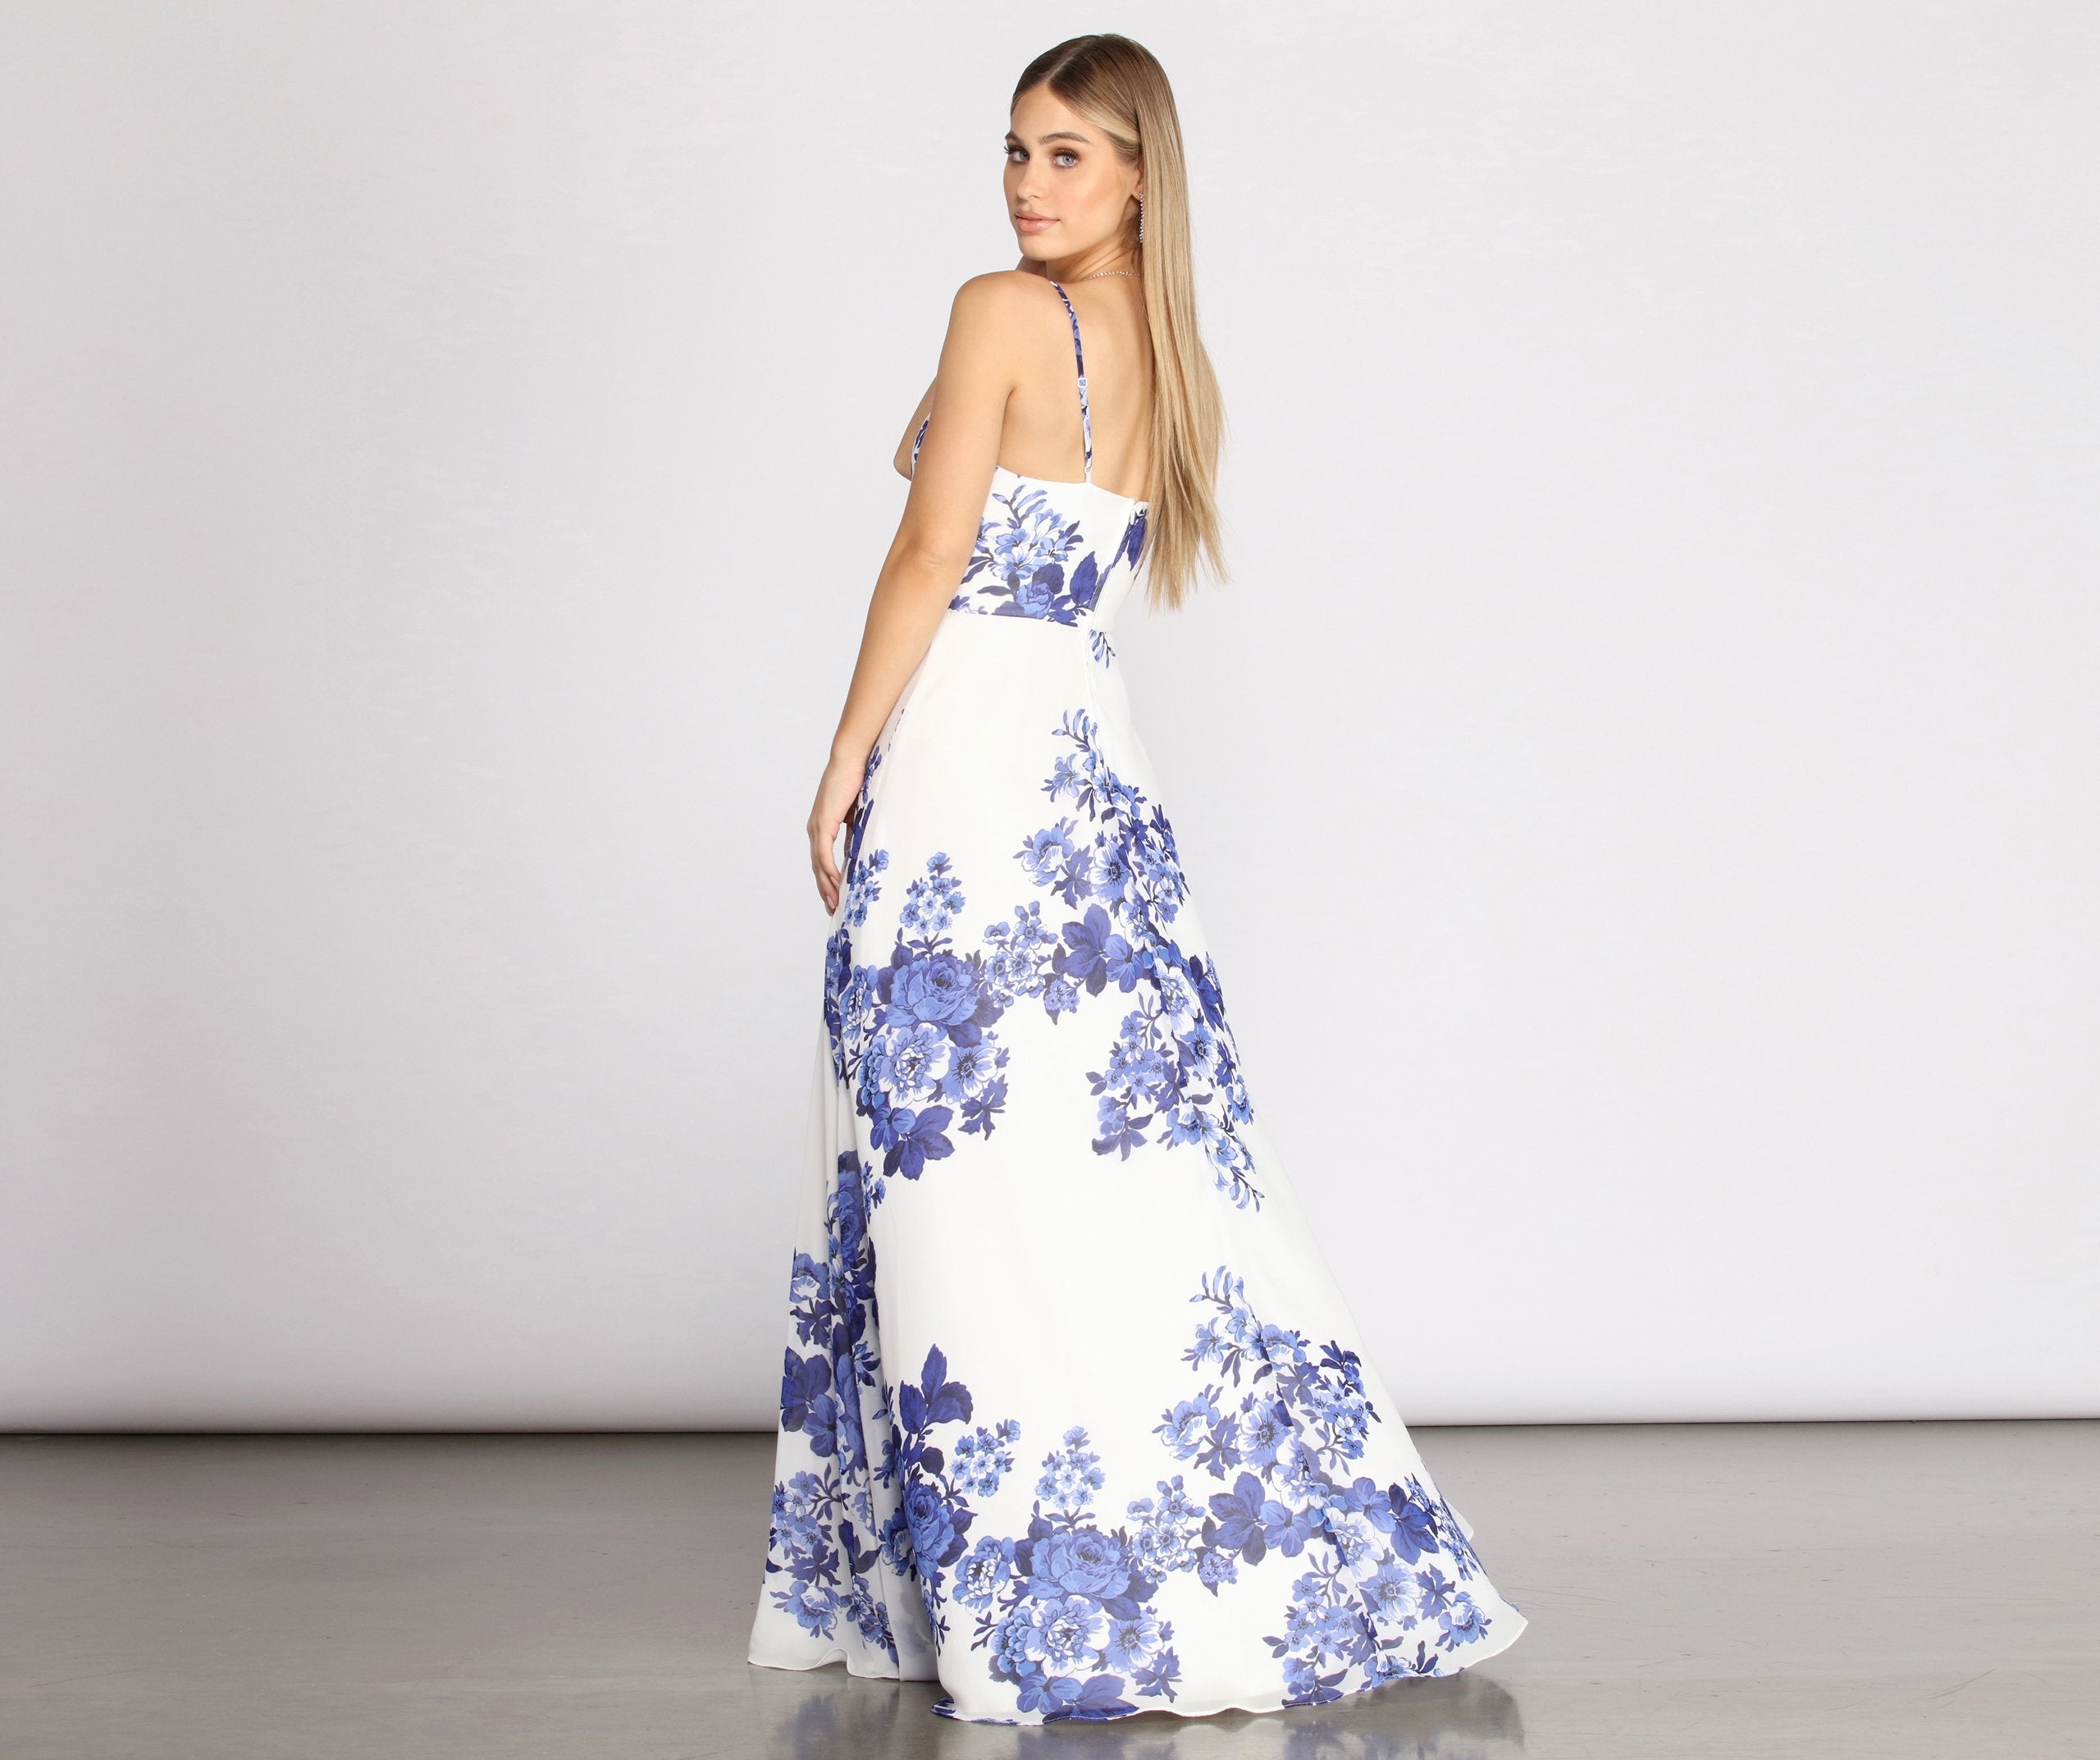 Kiana Floral Chiffon A-Line Dress